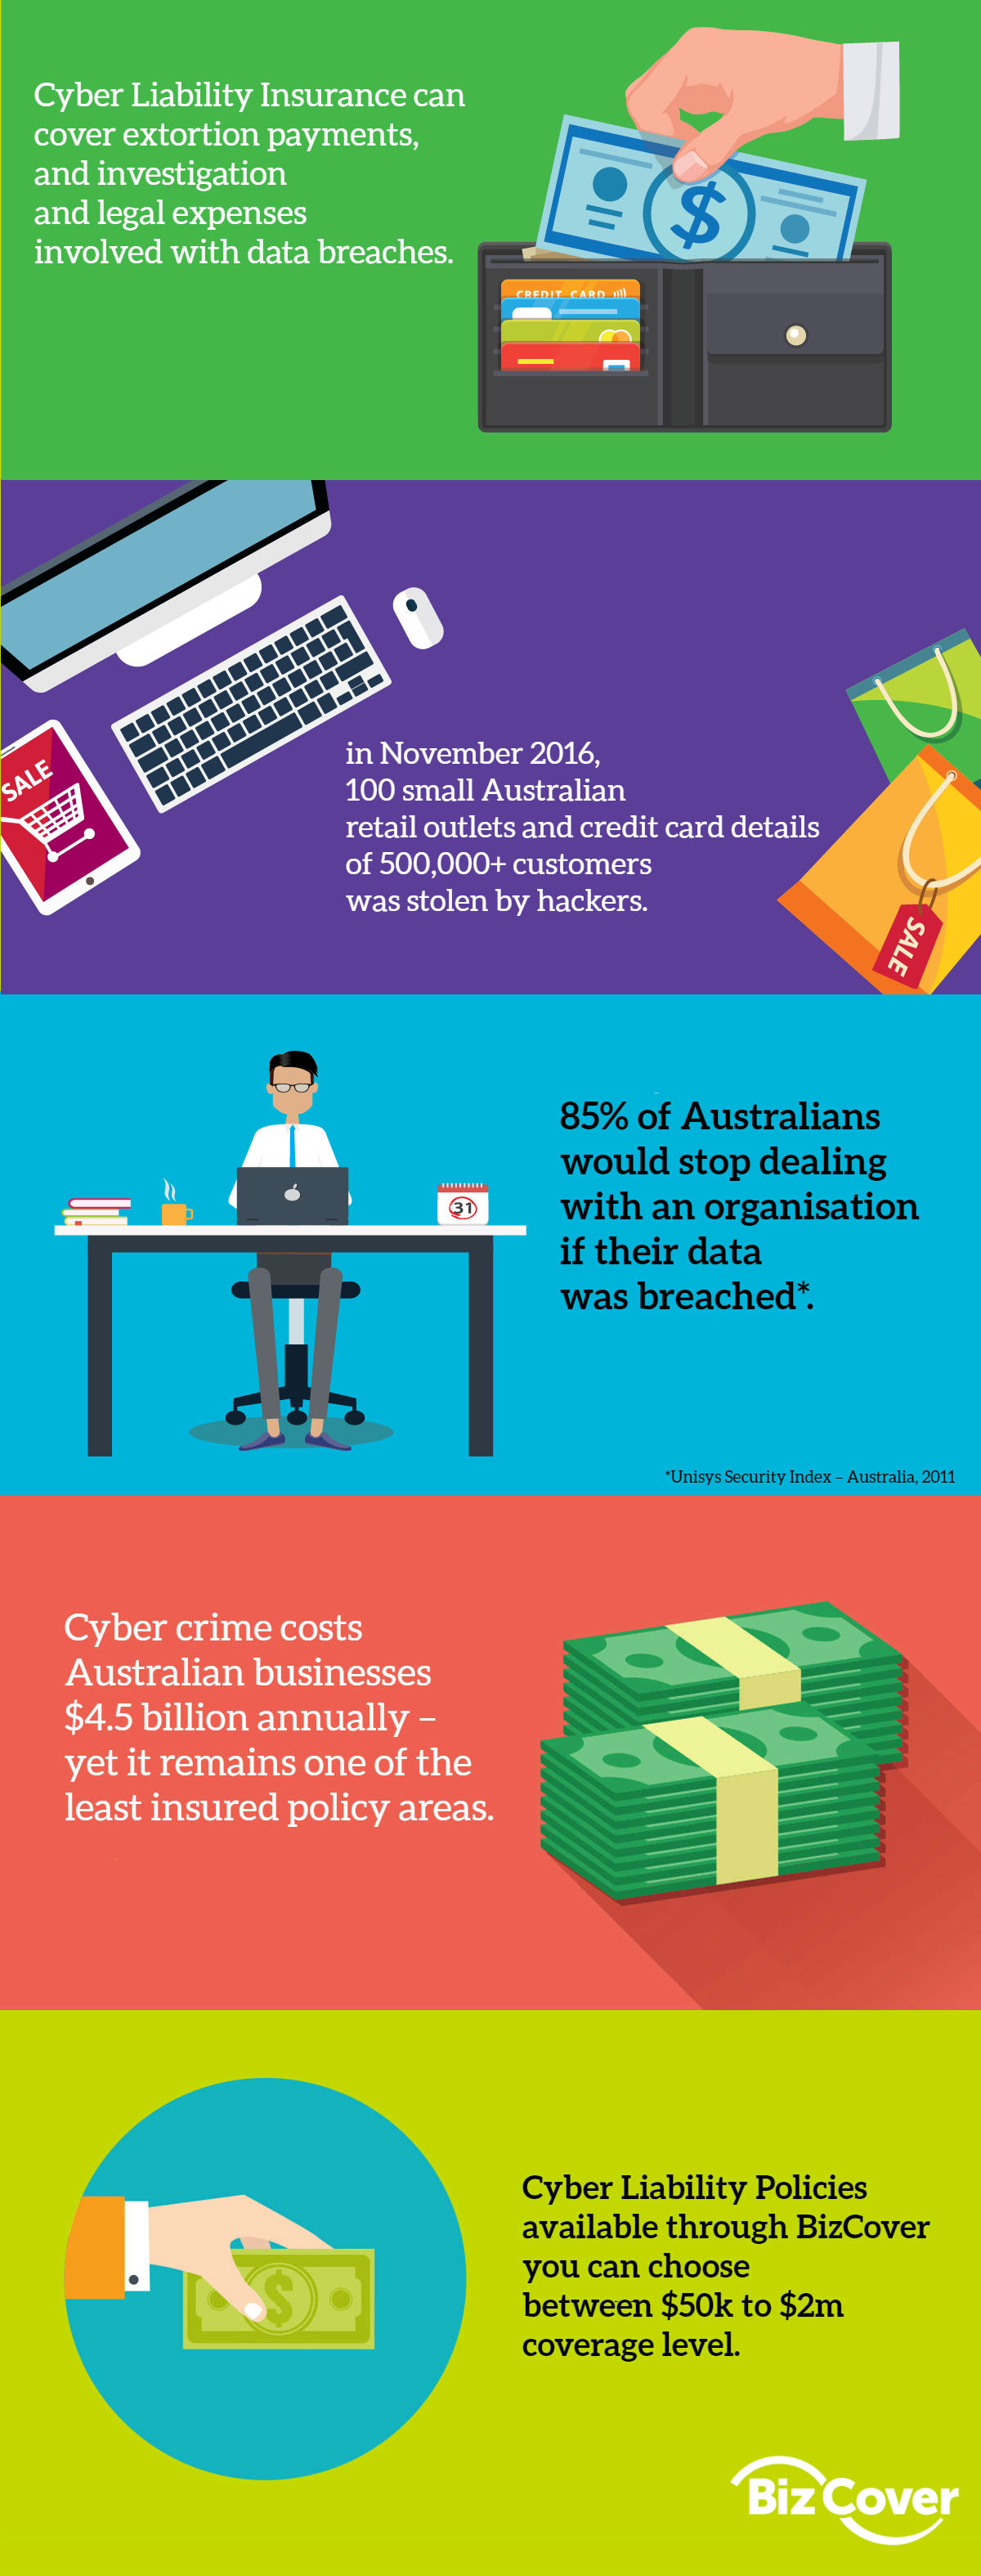 Cyber Liability Insurance Quotes in Australia | BizCover